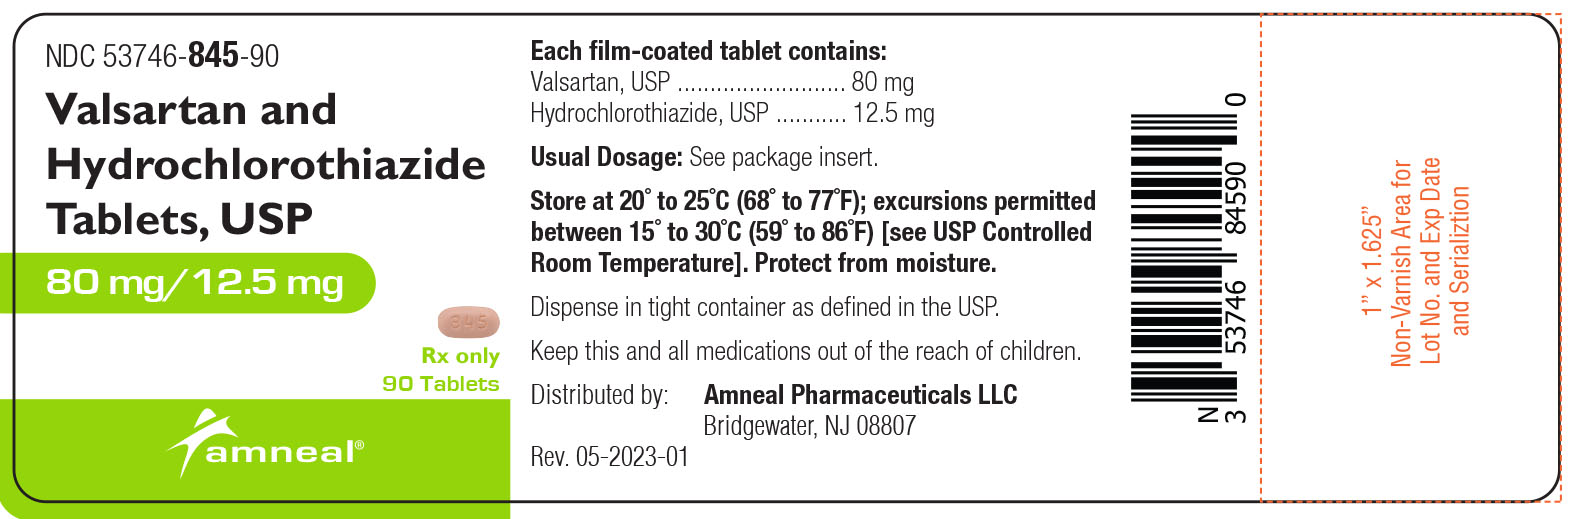 80 mg/12.5 mg Label